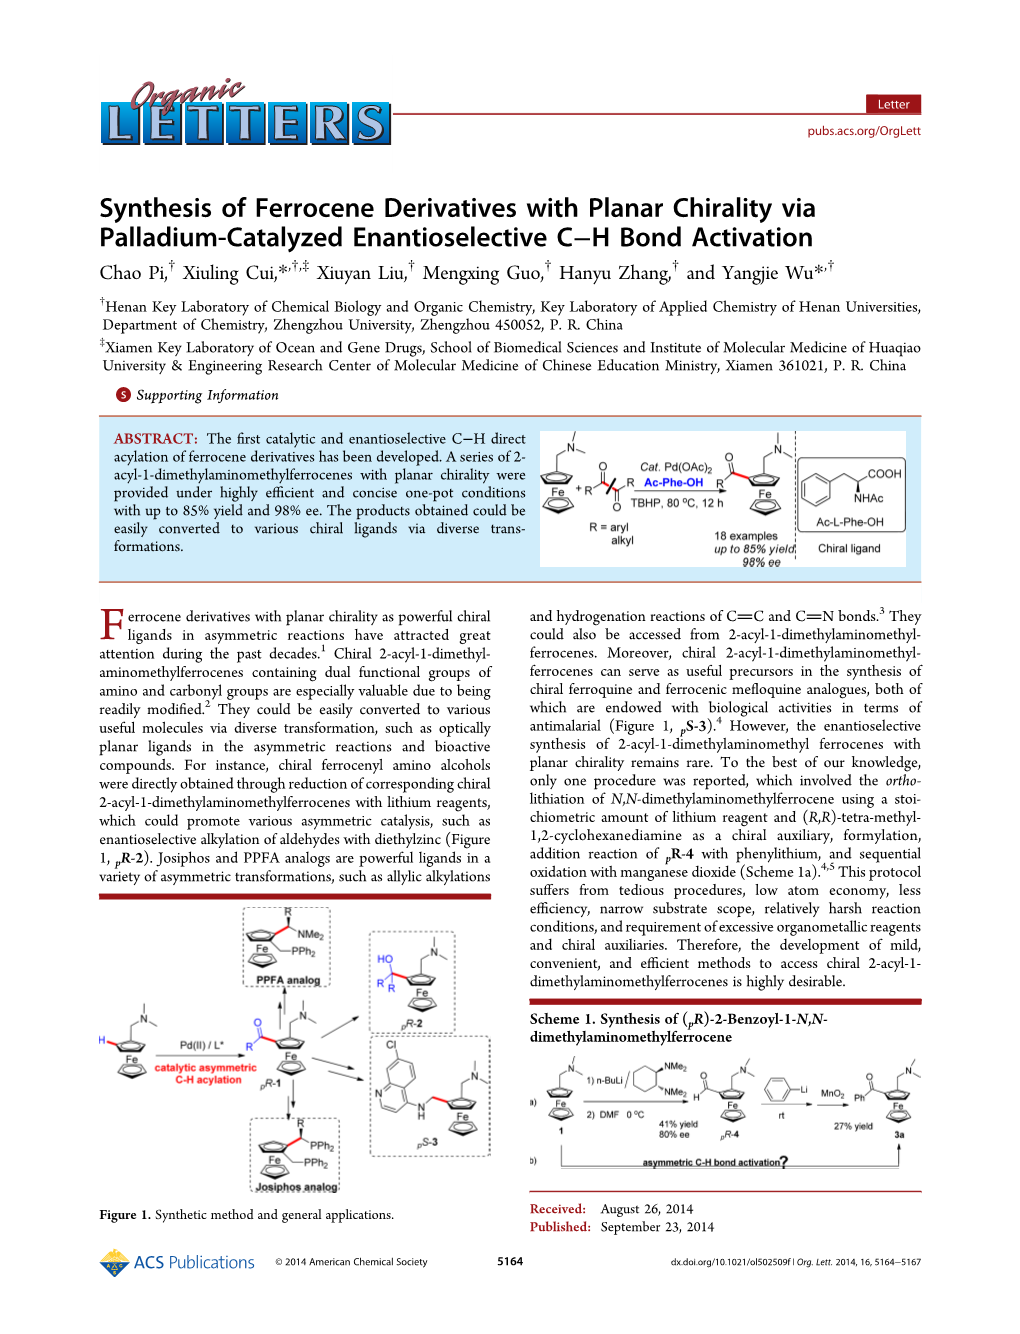 Synthesis of Ferrocene Derivatives with Planar Chirality Via Palladium